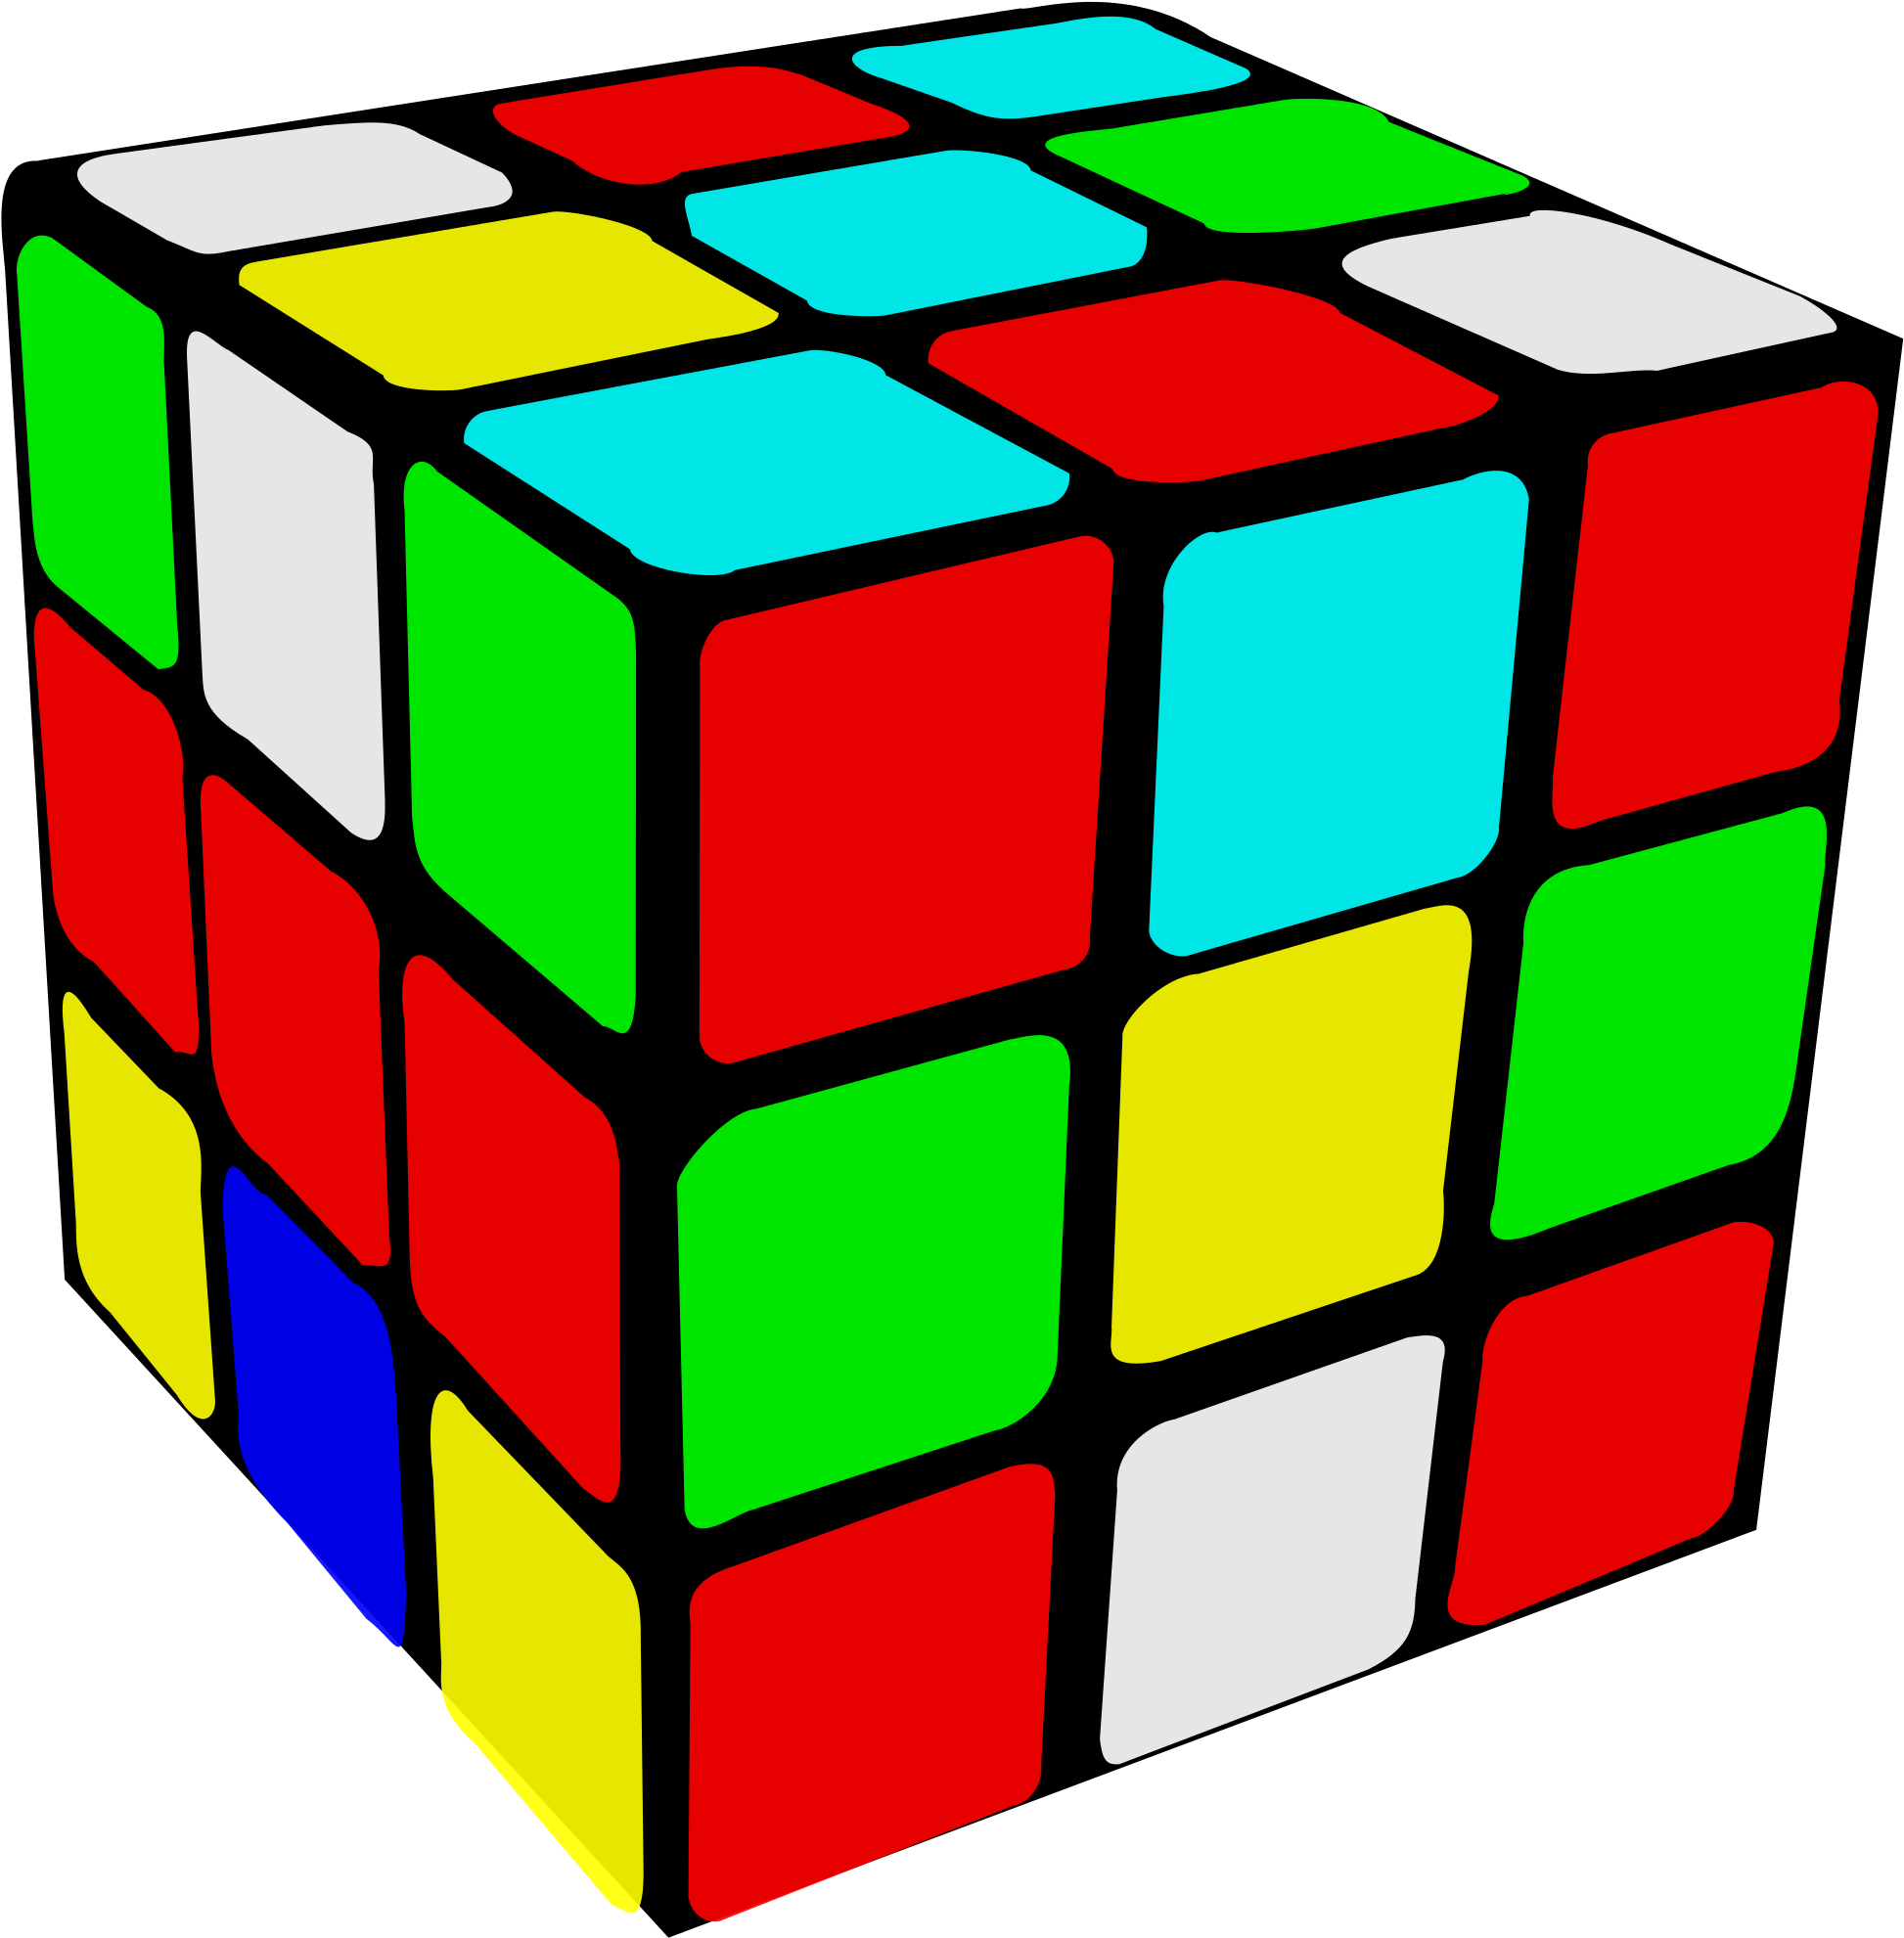 Kubik. Скрэмбл кубик Рубика. Ребенок и кубик Рубика. Кубик мультяшный. Кубик Рубика вектор.